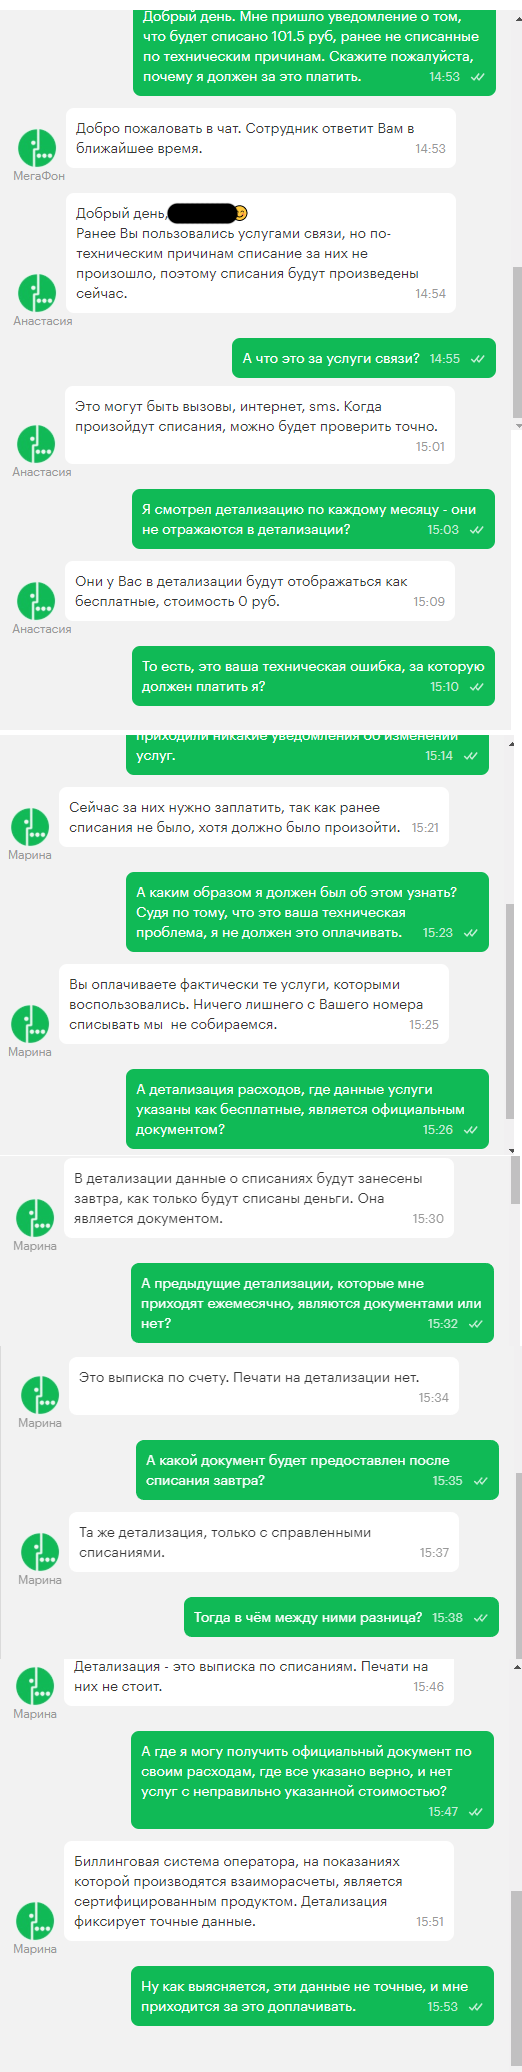 New megaphone jokes - My, Sberbank, Megaphone, Cellular operators, Longpost